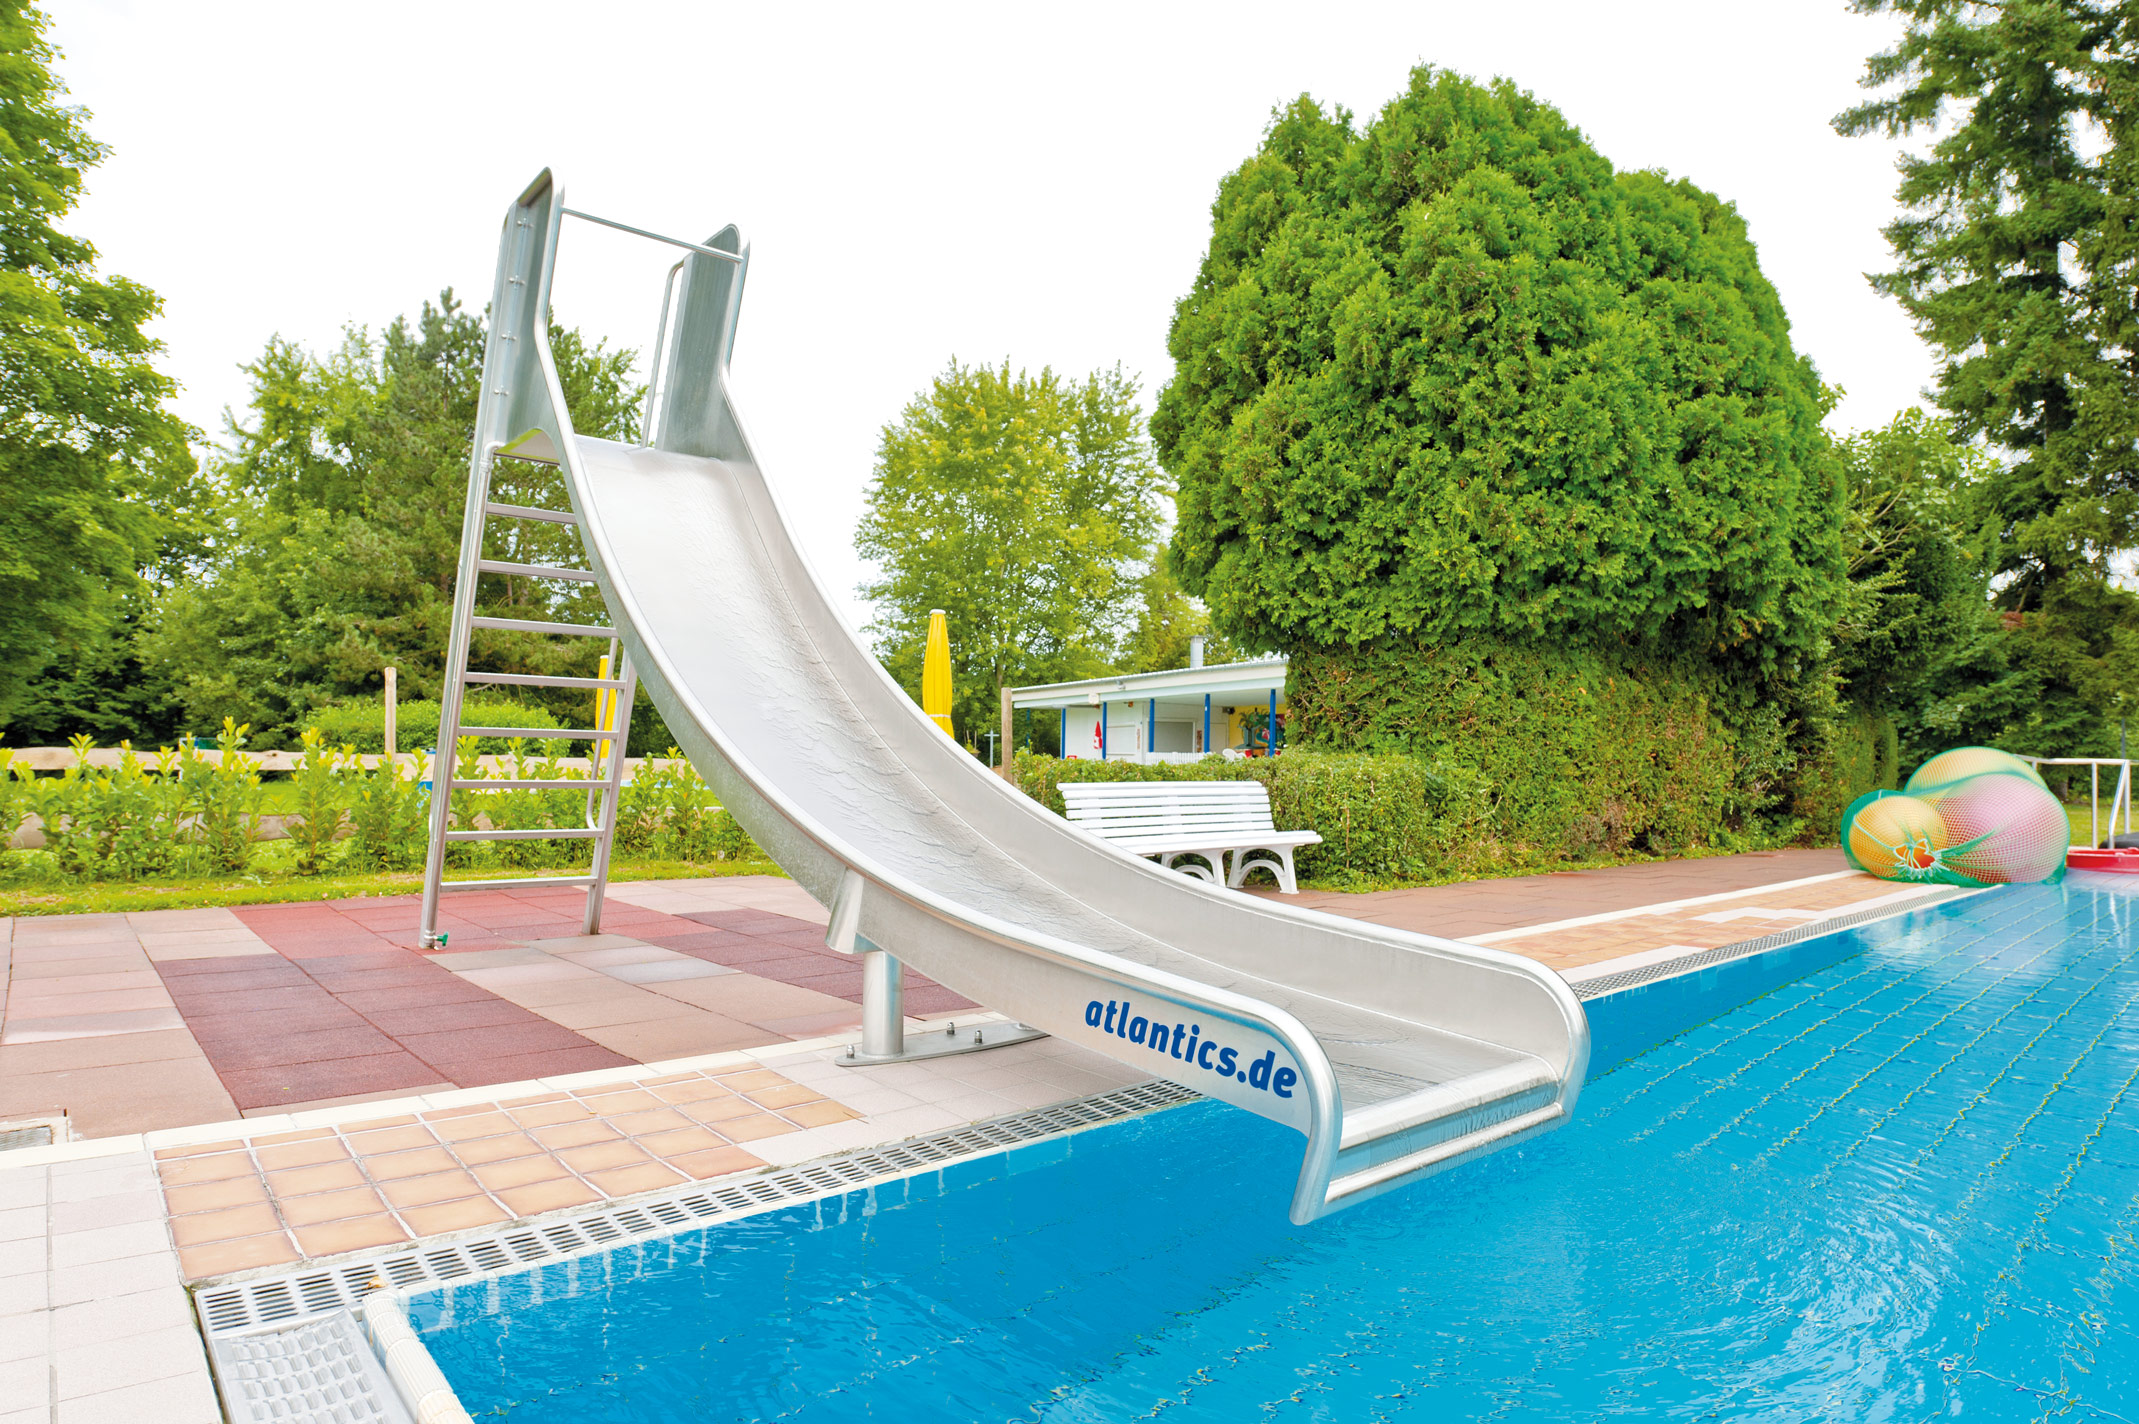 atlantics stainless steel slides open air swimming pool bathroom koenig bathroomkoenig bayern boxwater pool 117270